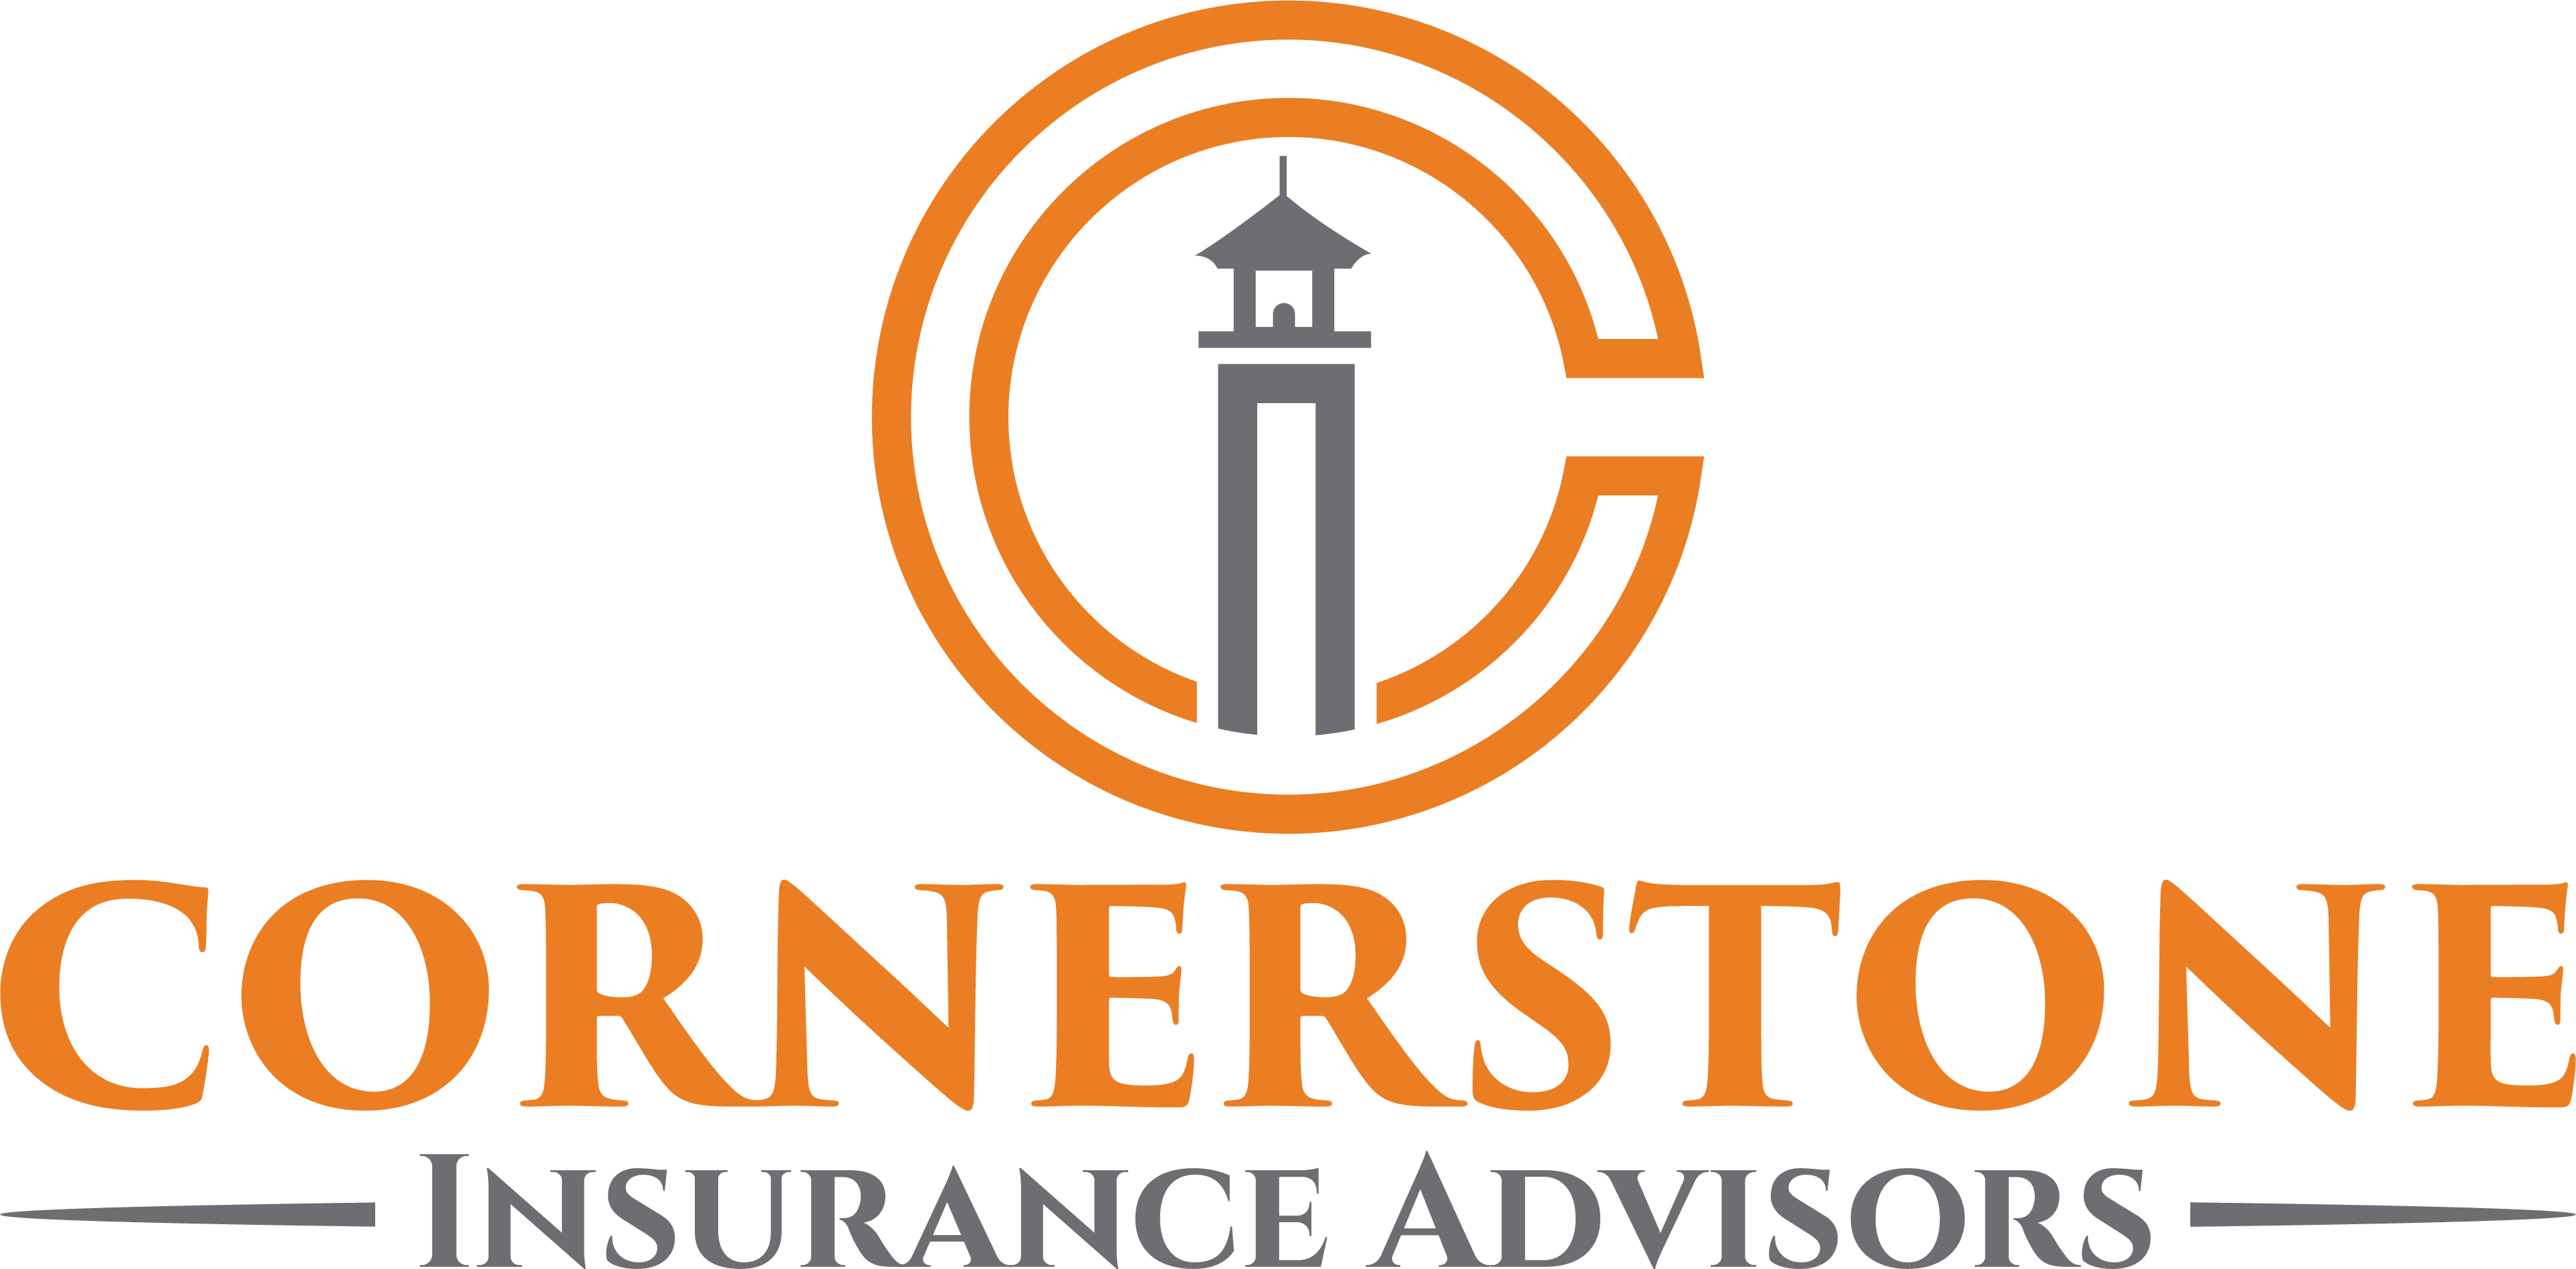 Cornerstone Insurance Advisors